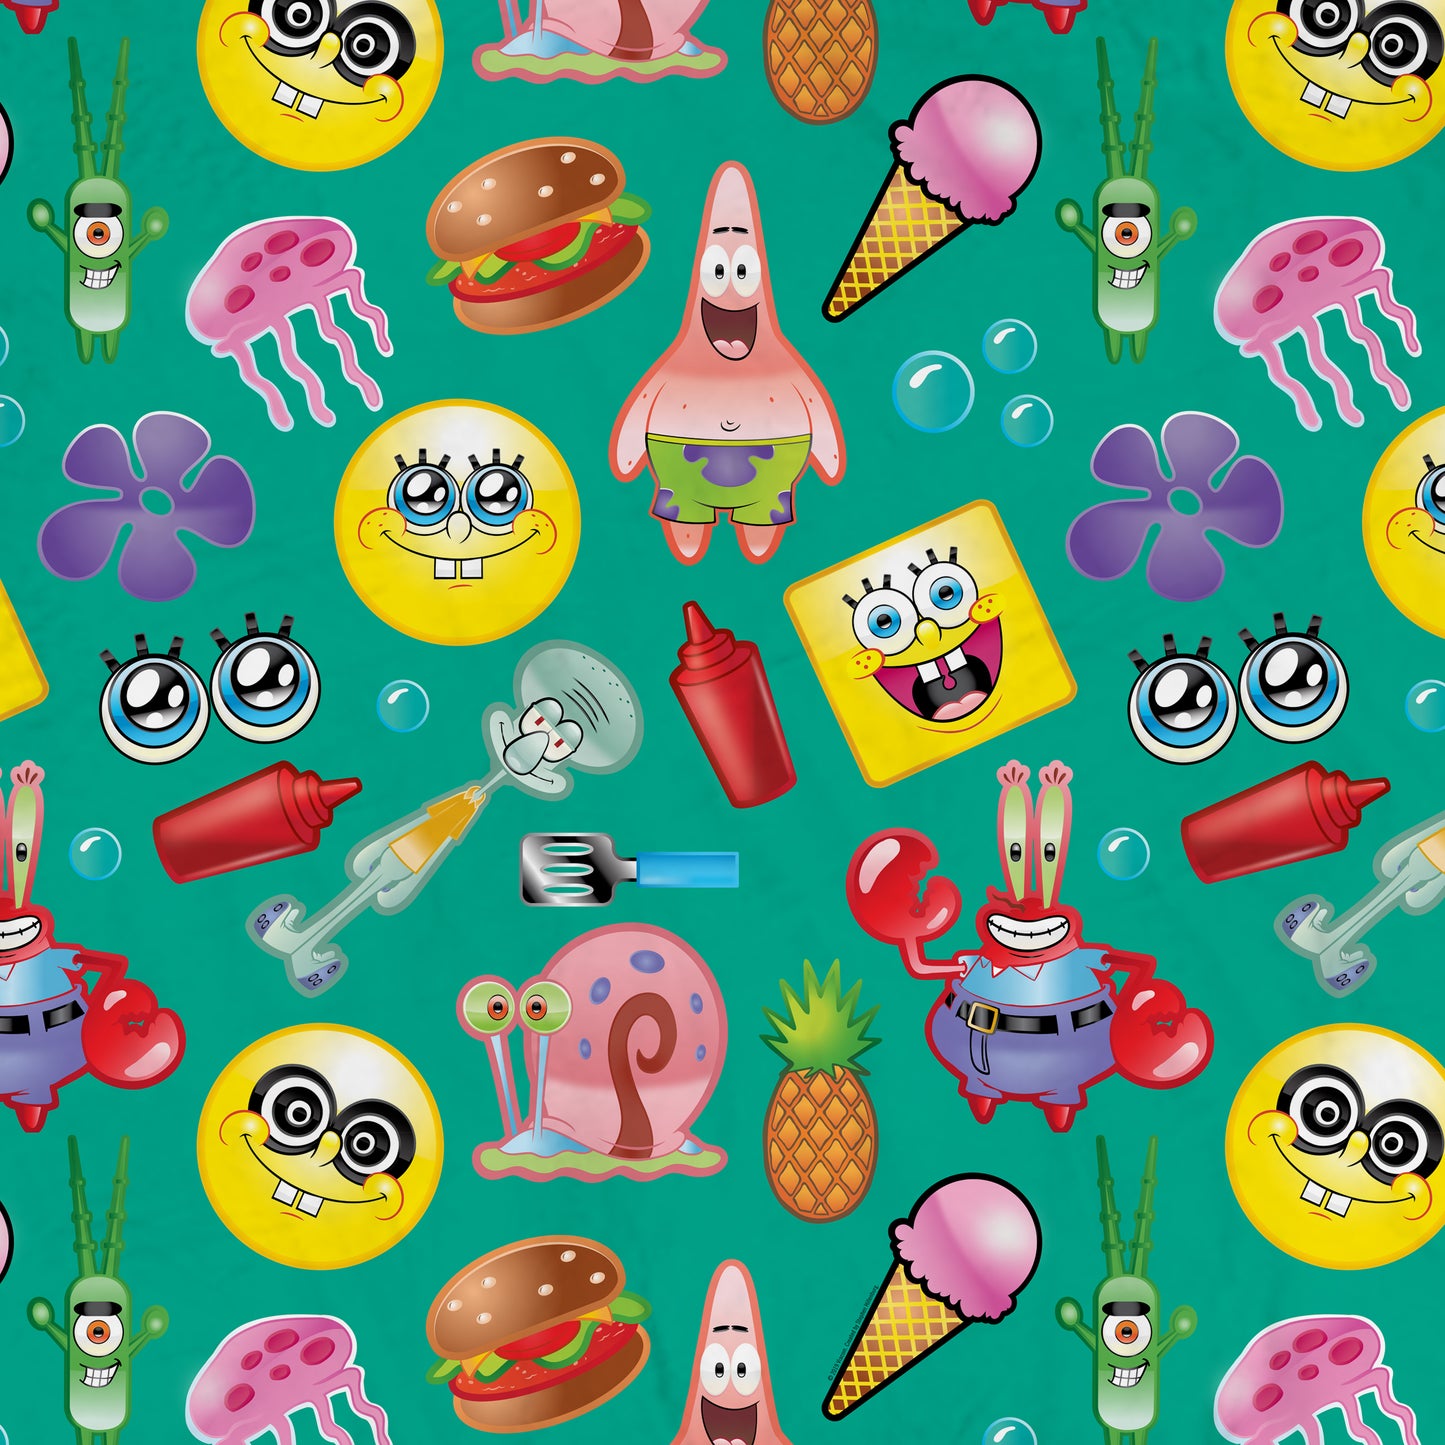 SpongeBob SquarePants Emojis Sherpa Blanket